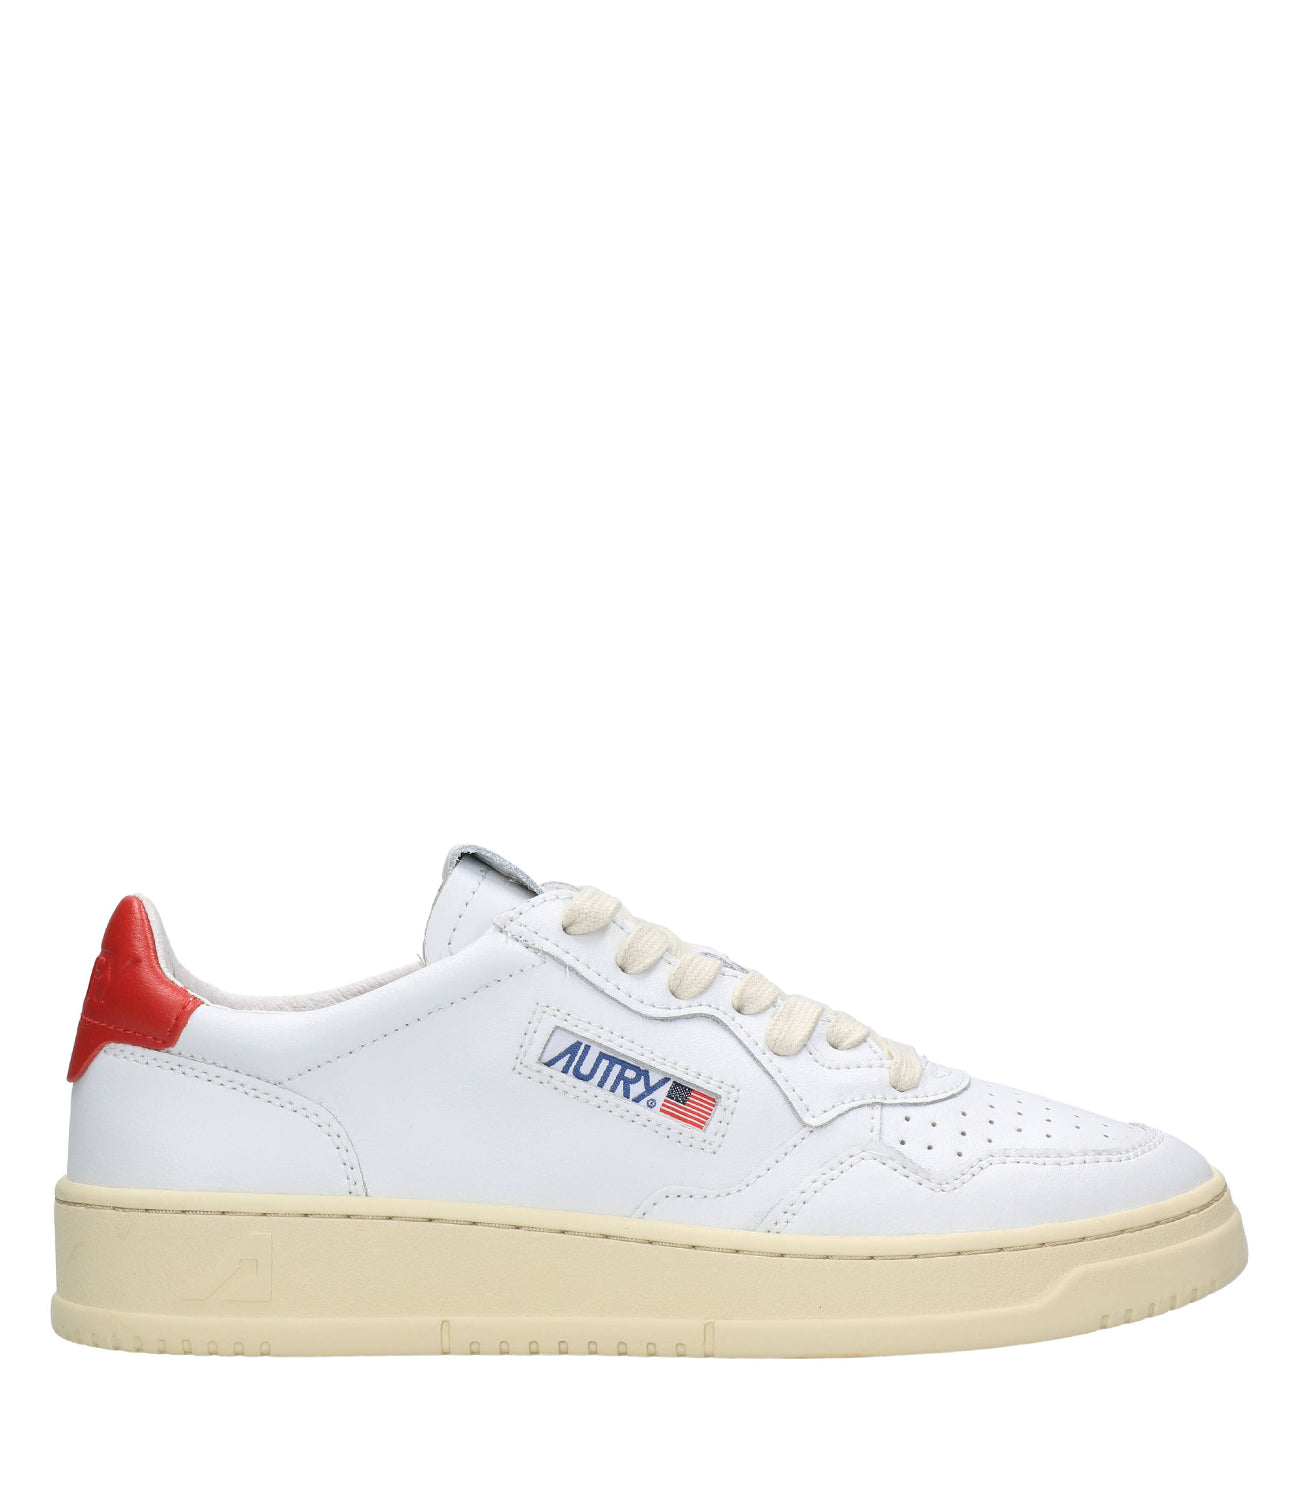 Autry | Sneakers Bianco e Rosso